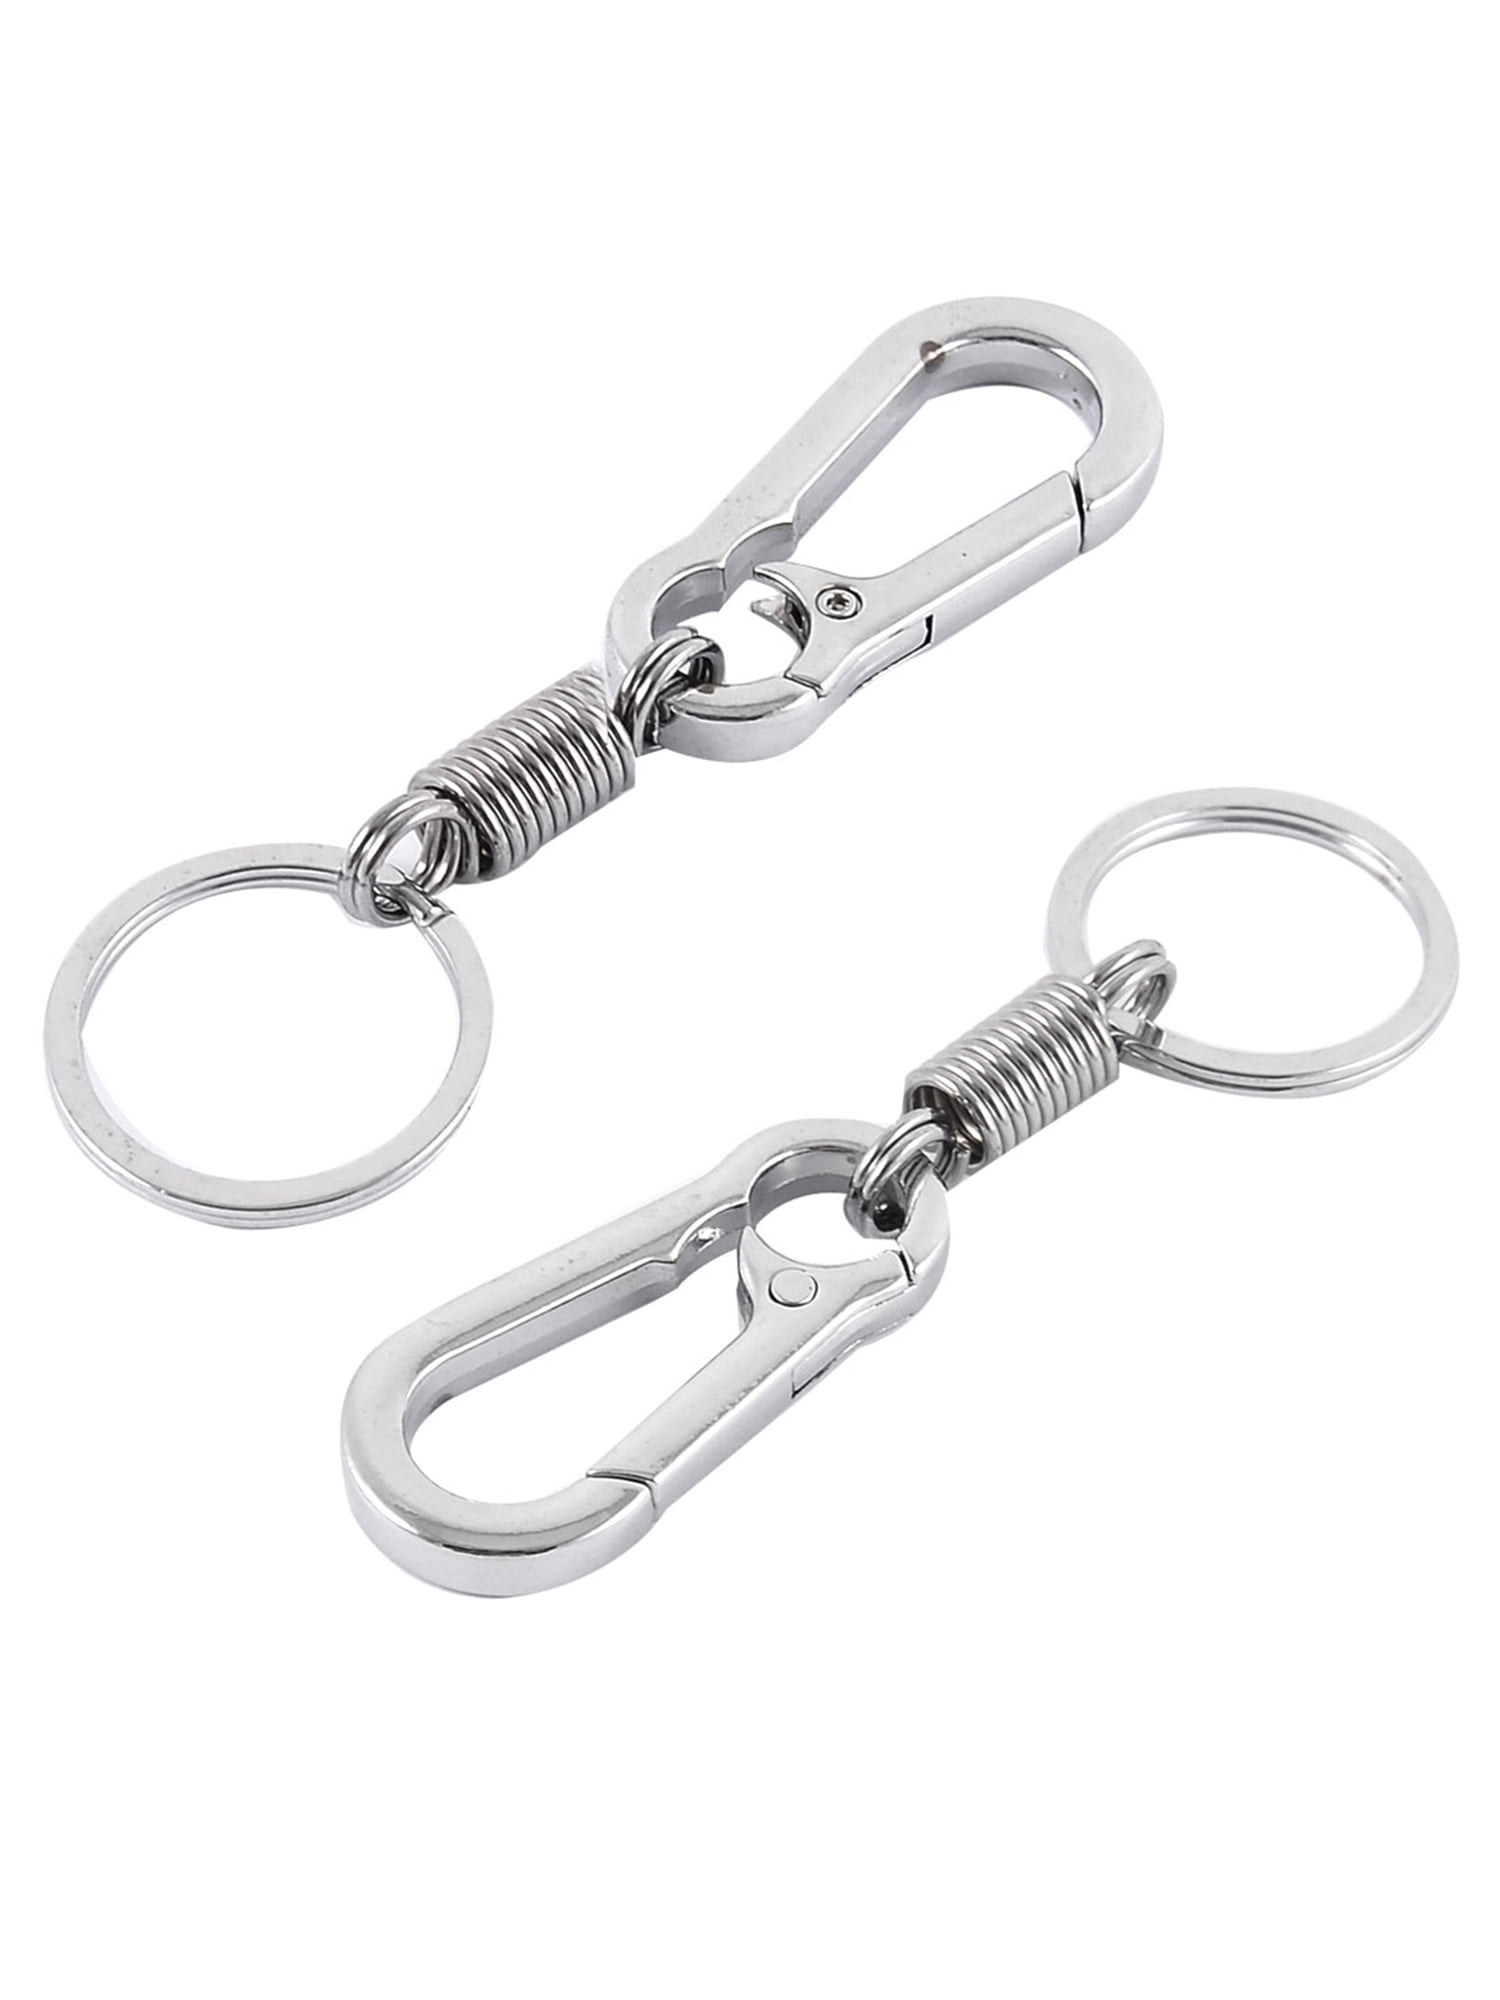 Carabiner Key Ring Metal Spring Locking Clip Chain Key Holder Accessory EDC I2G2 